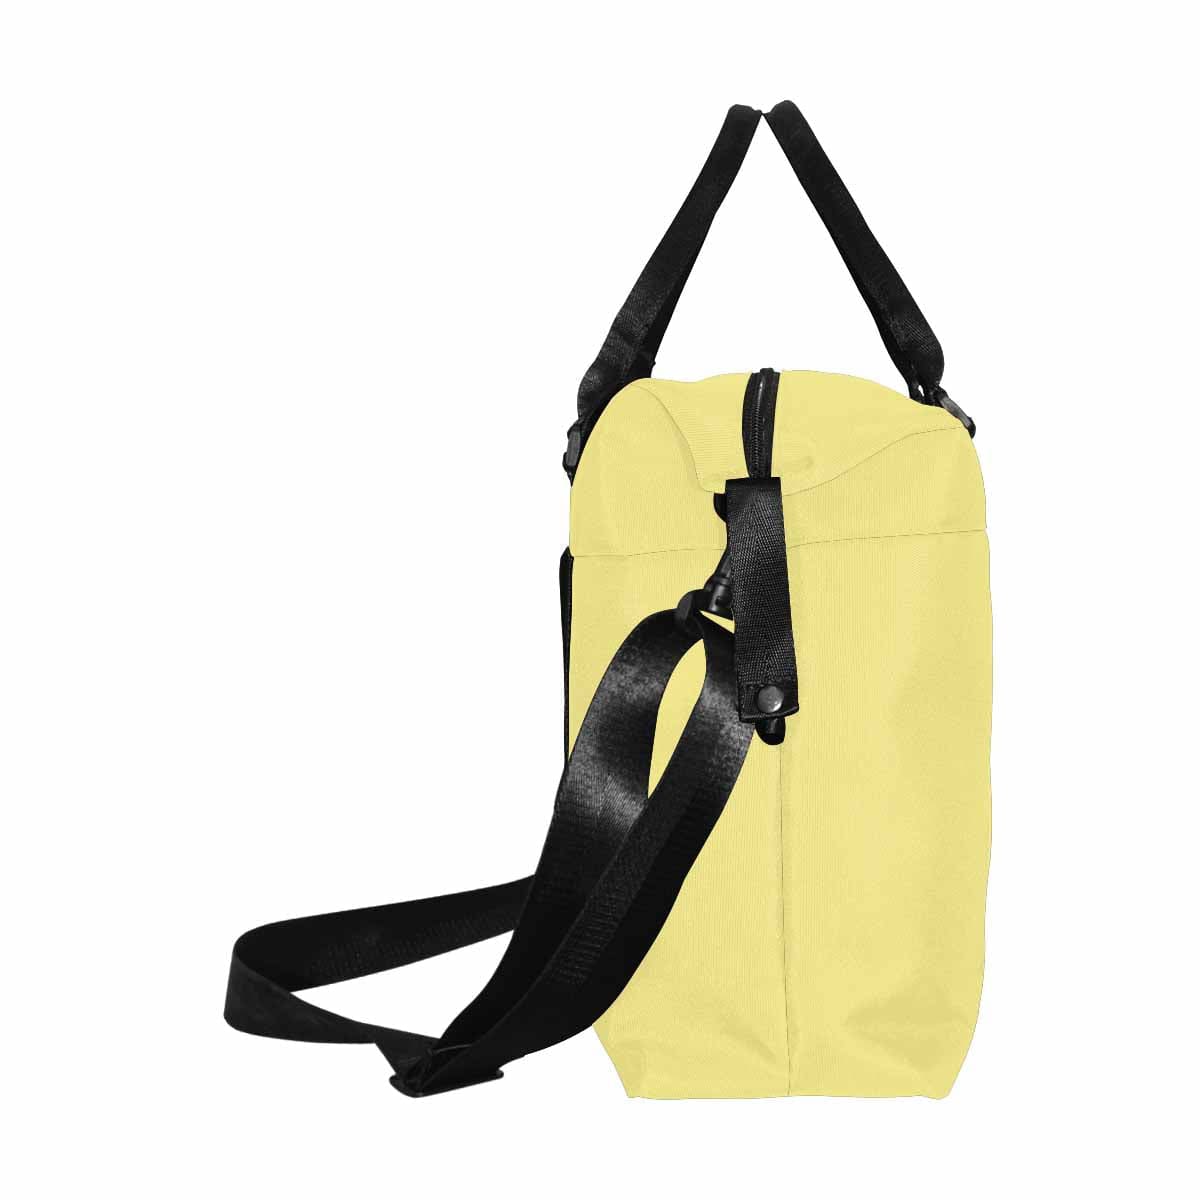 Khaki Yellow Duffel Bag Large Travel Carry On - Bags | Duffel Bags